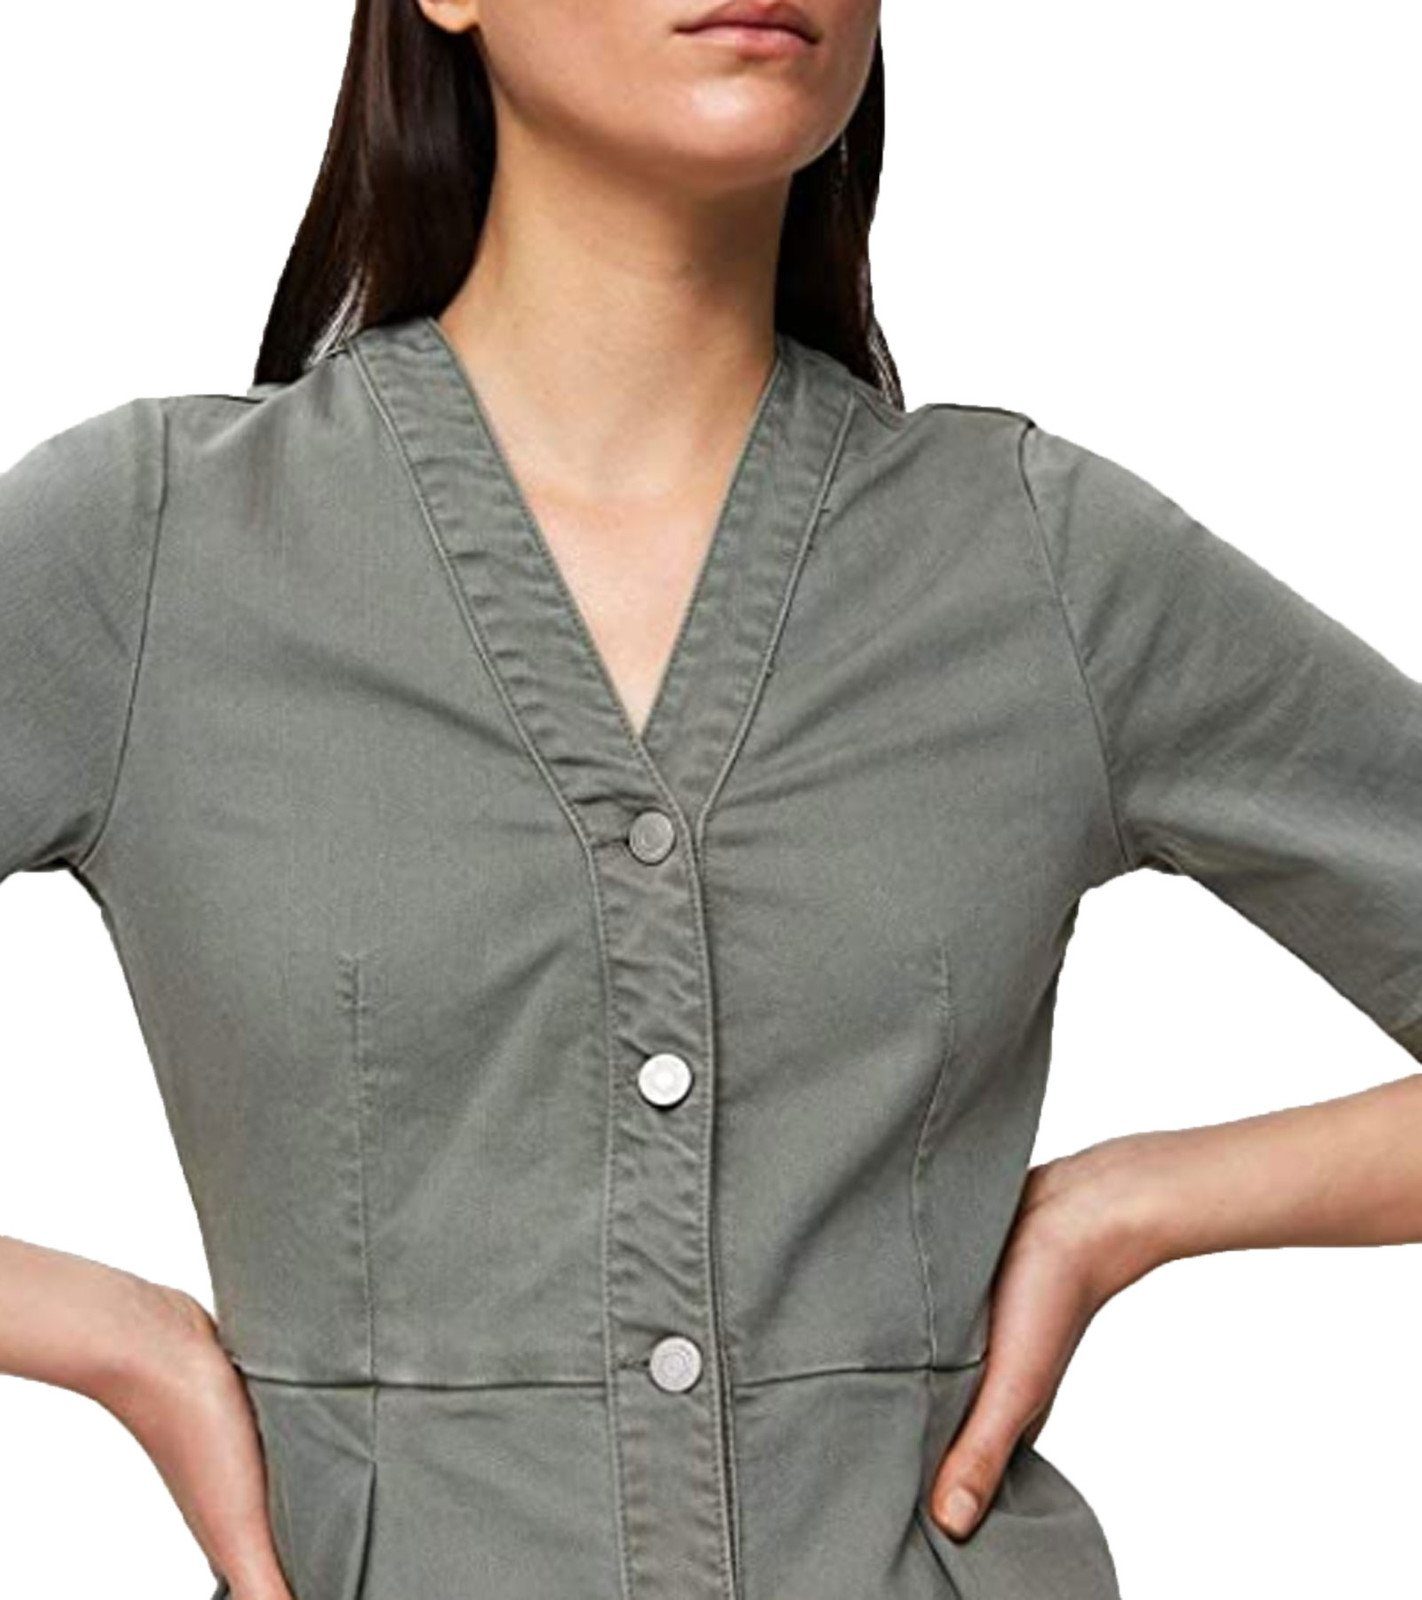 SELECTED FEMME Jeanskleid »SELECTED FEMME SLFLise Jeans-Kleid attraktives  Damen Mini-Kleid mit Knopfleiste Herbst-Kleid Grün« online kaufen | OTTO